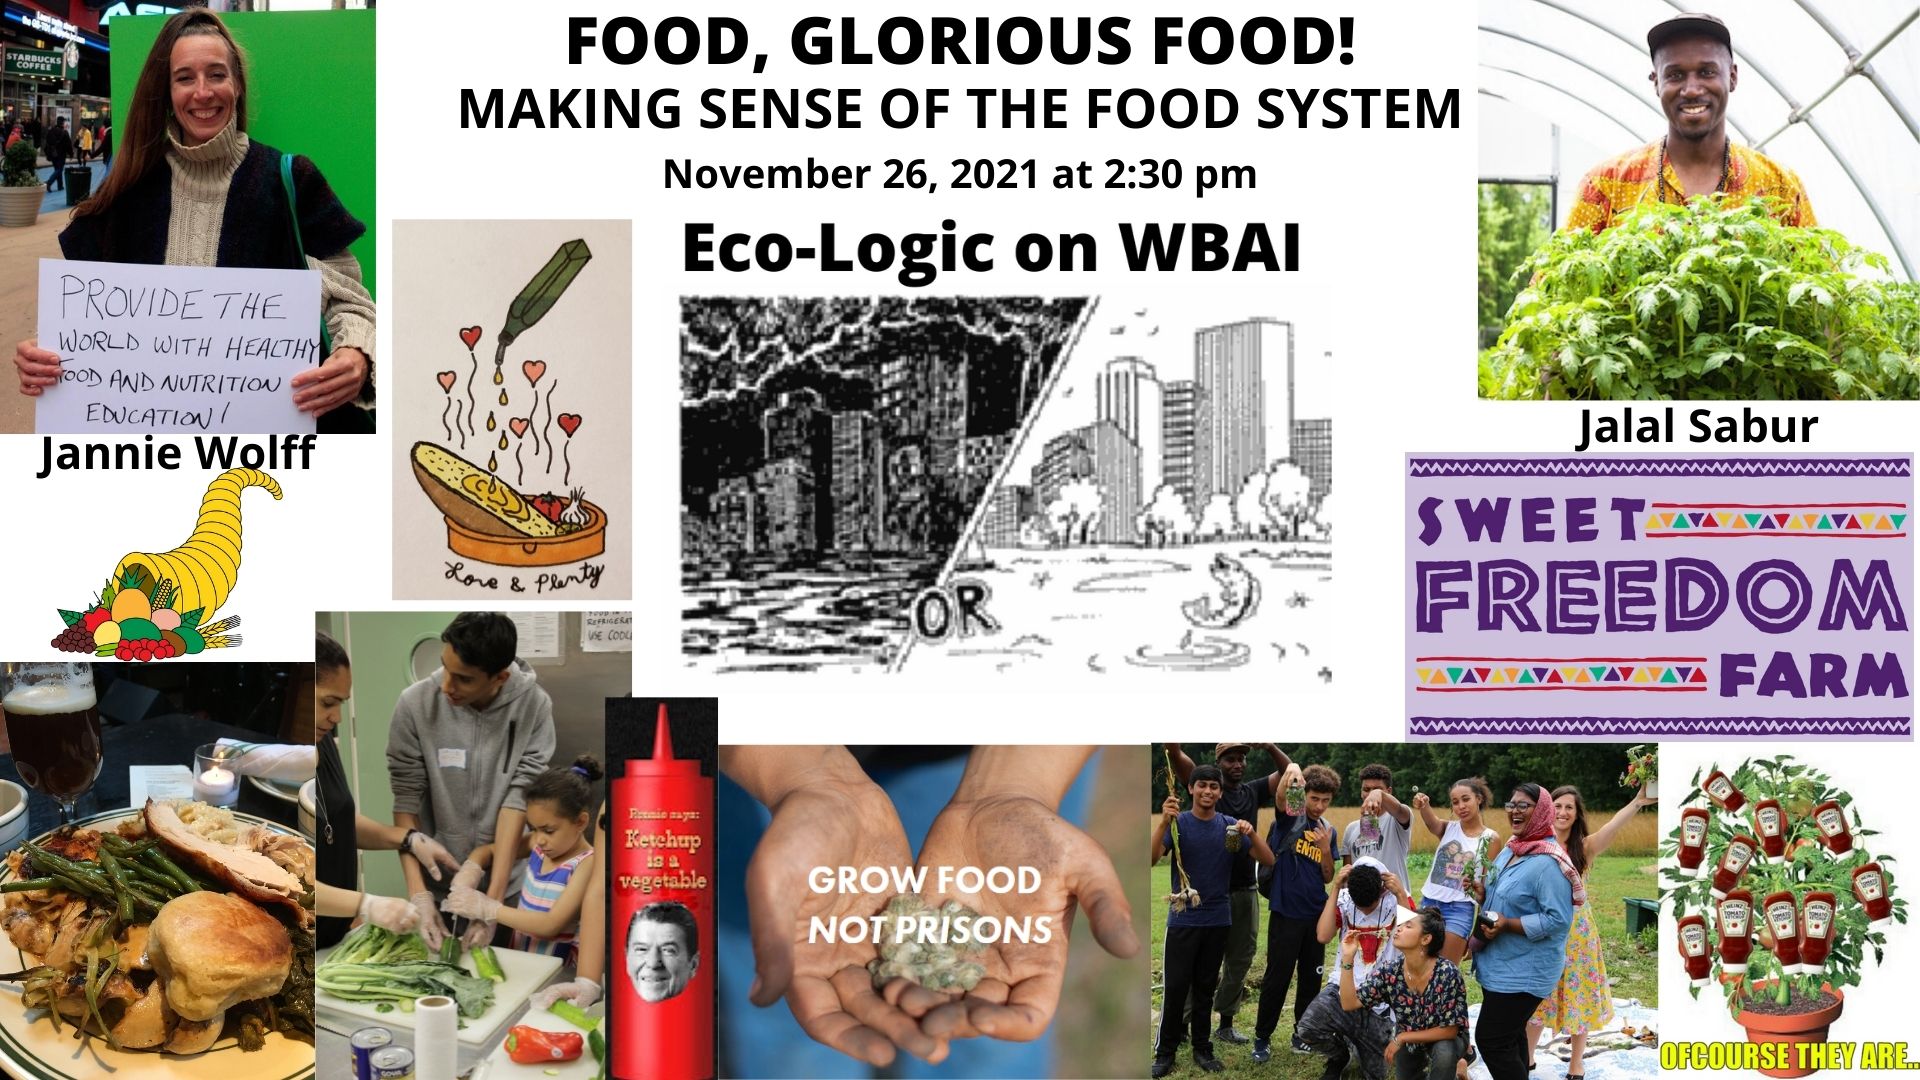 Eco-Logic meme 11-16-21 Food